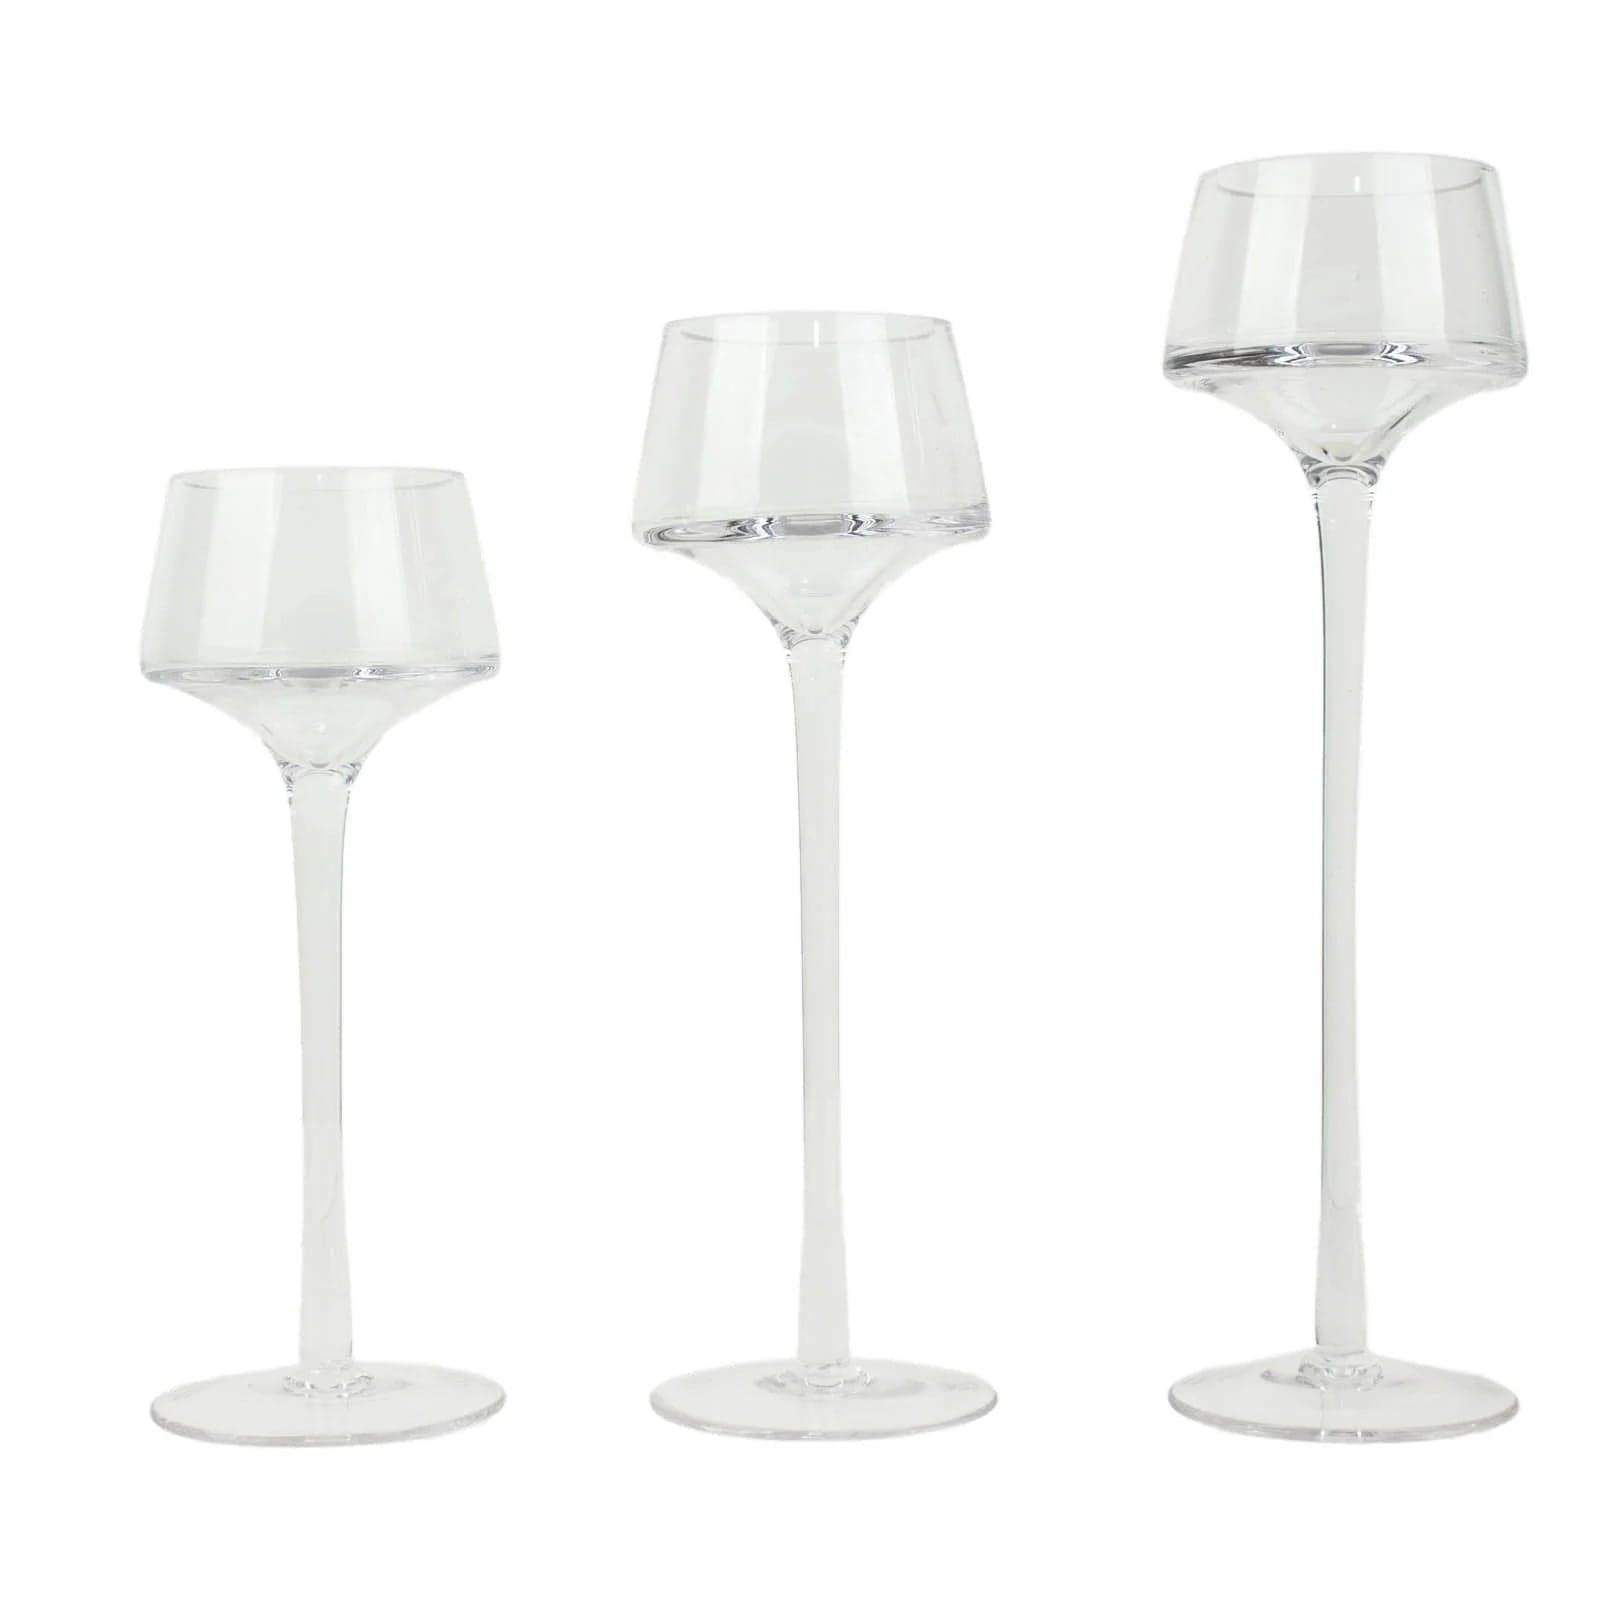 3 Long Stem Glass Pedestal Table Vases Candle Holders - Clear VASE_A73_SET_CLR